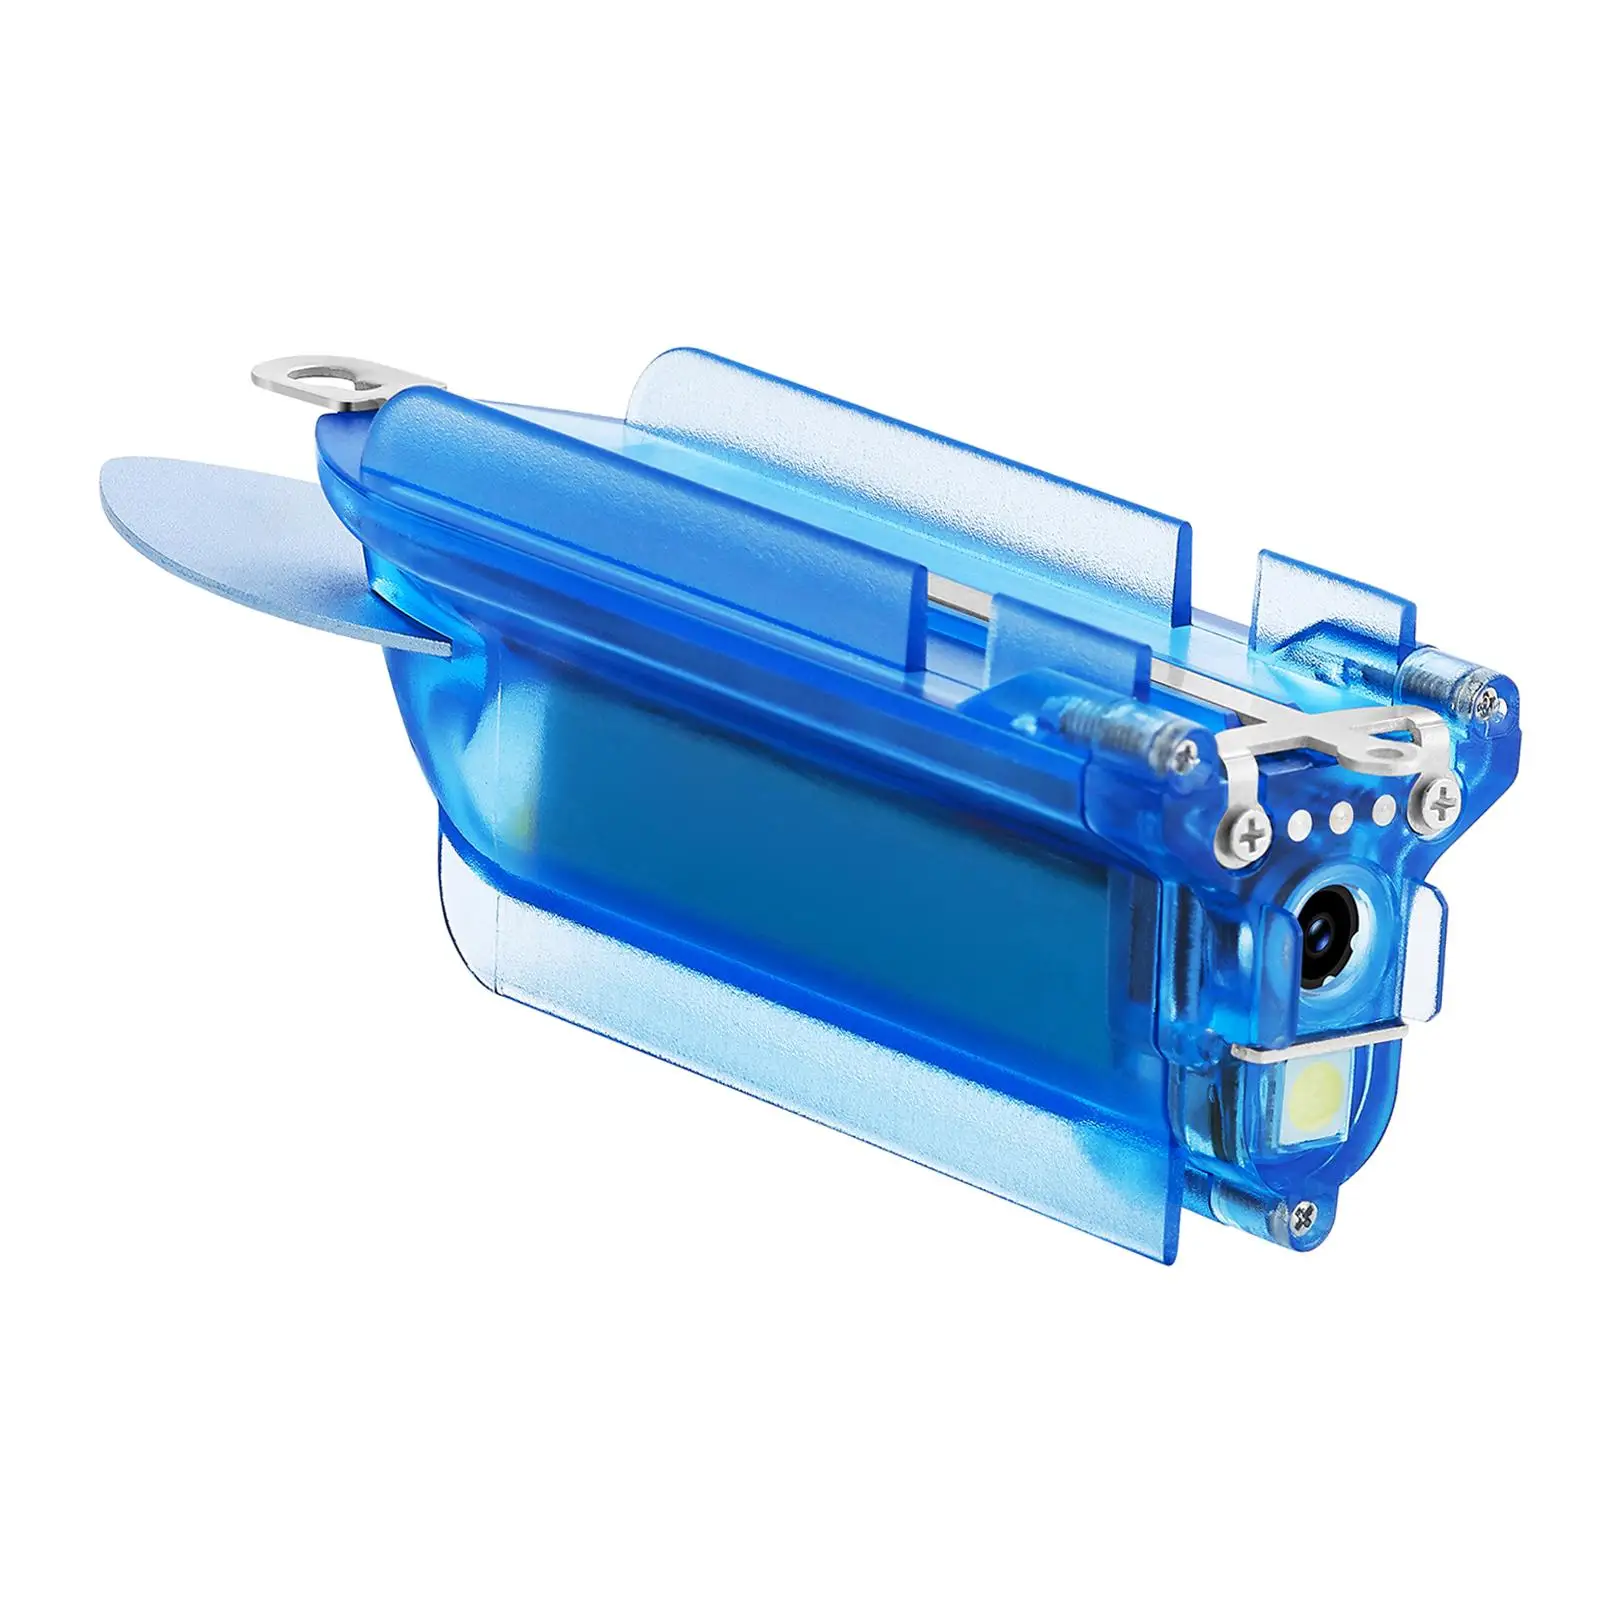 Portable Underwater Fishing Camera Fish Finder LED .5cm Waterproof Fishfinder for Sea Fishing Ice Lake Fishing Supplies